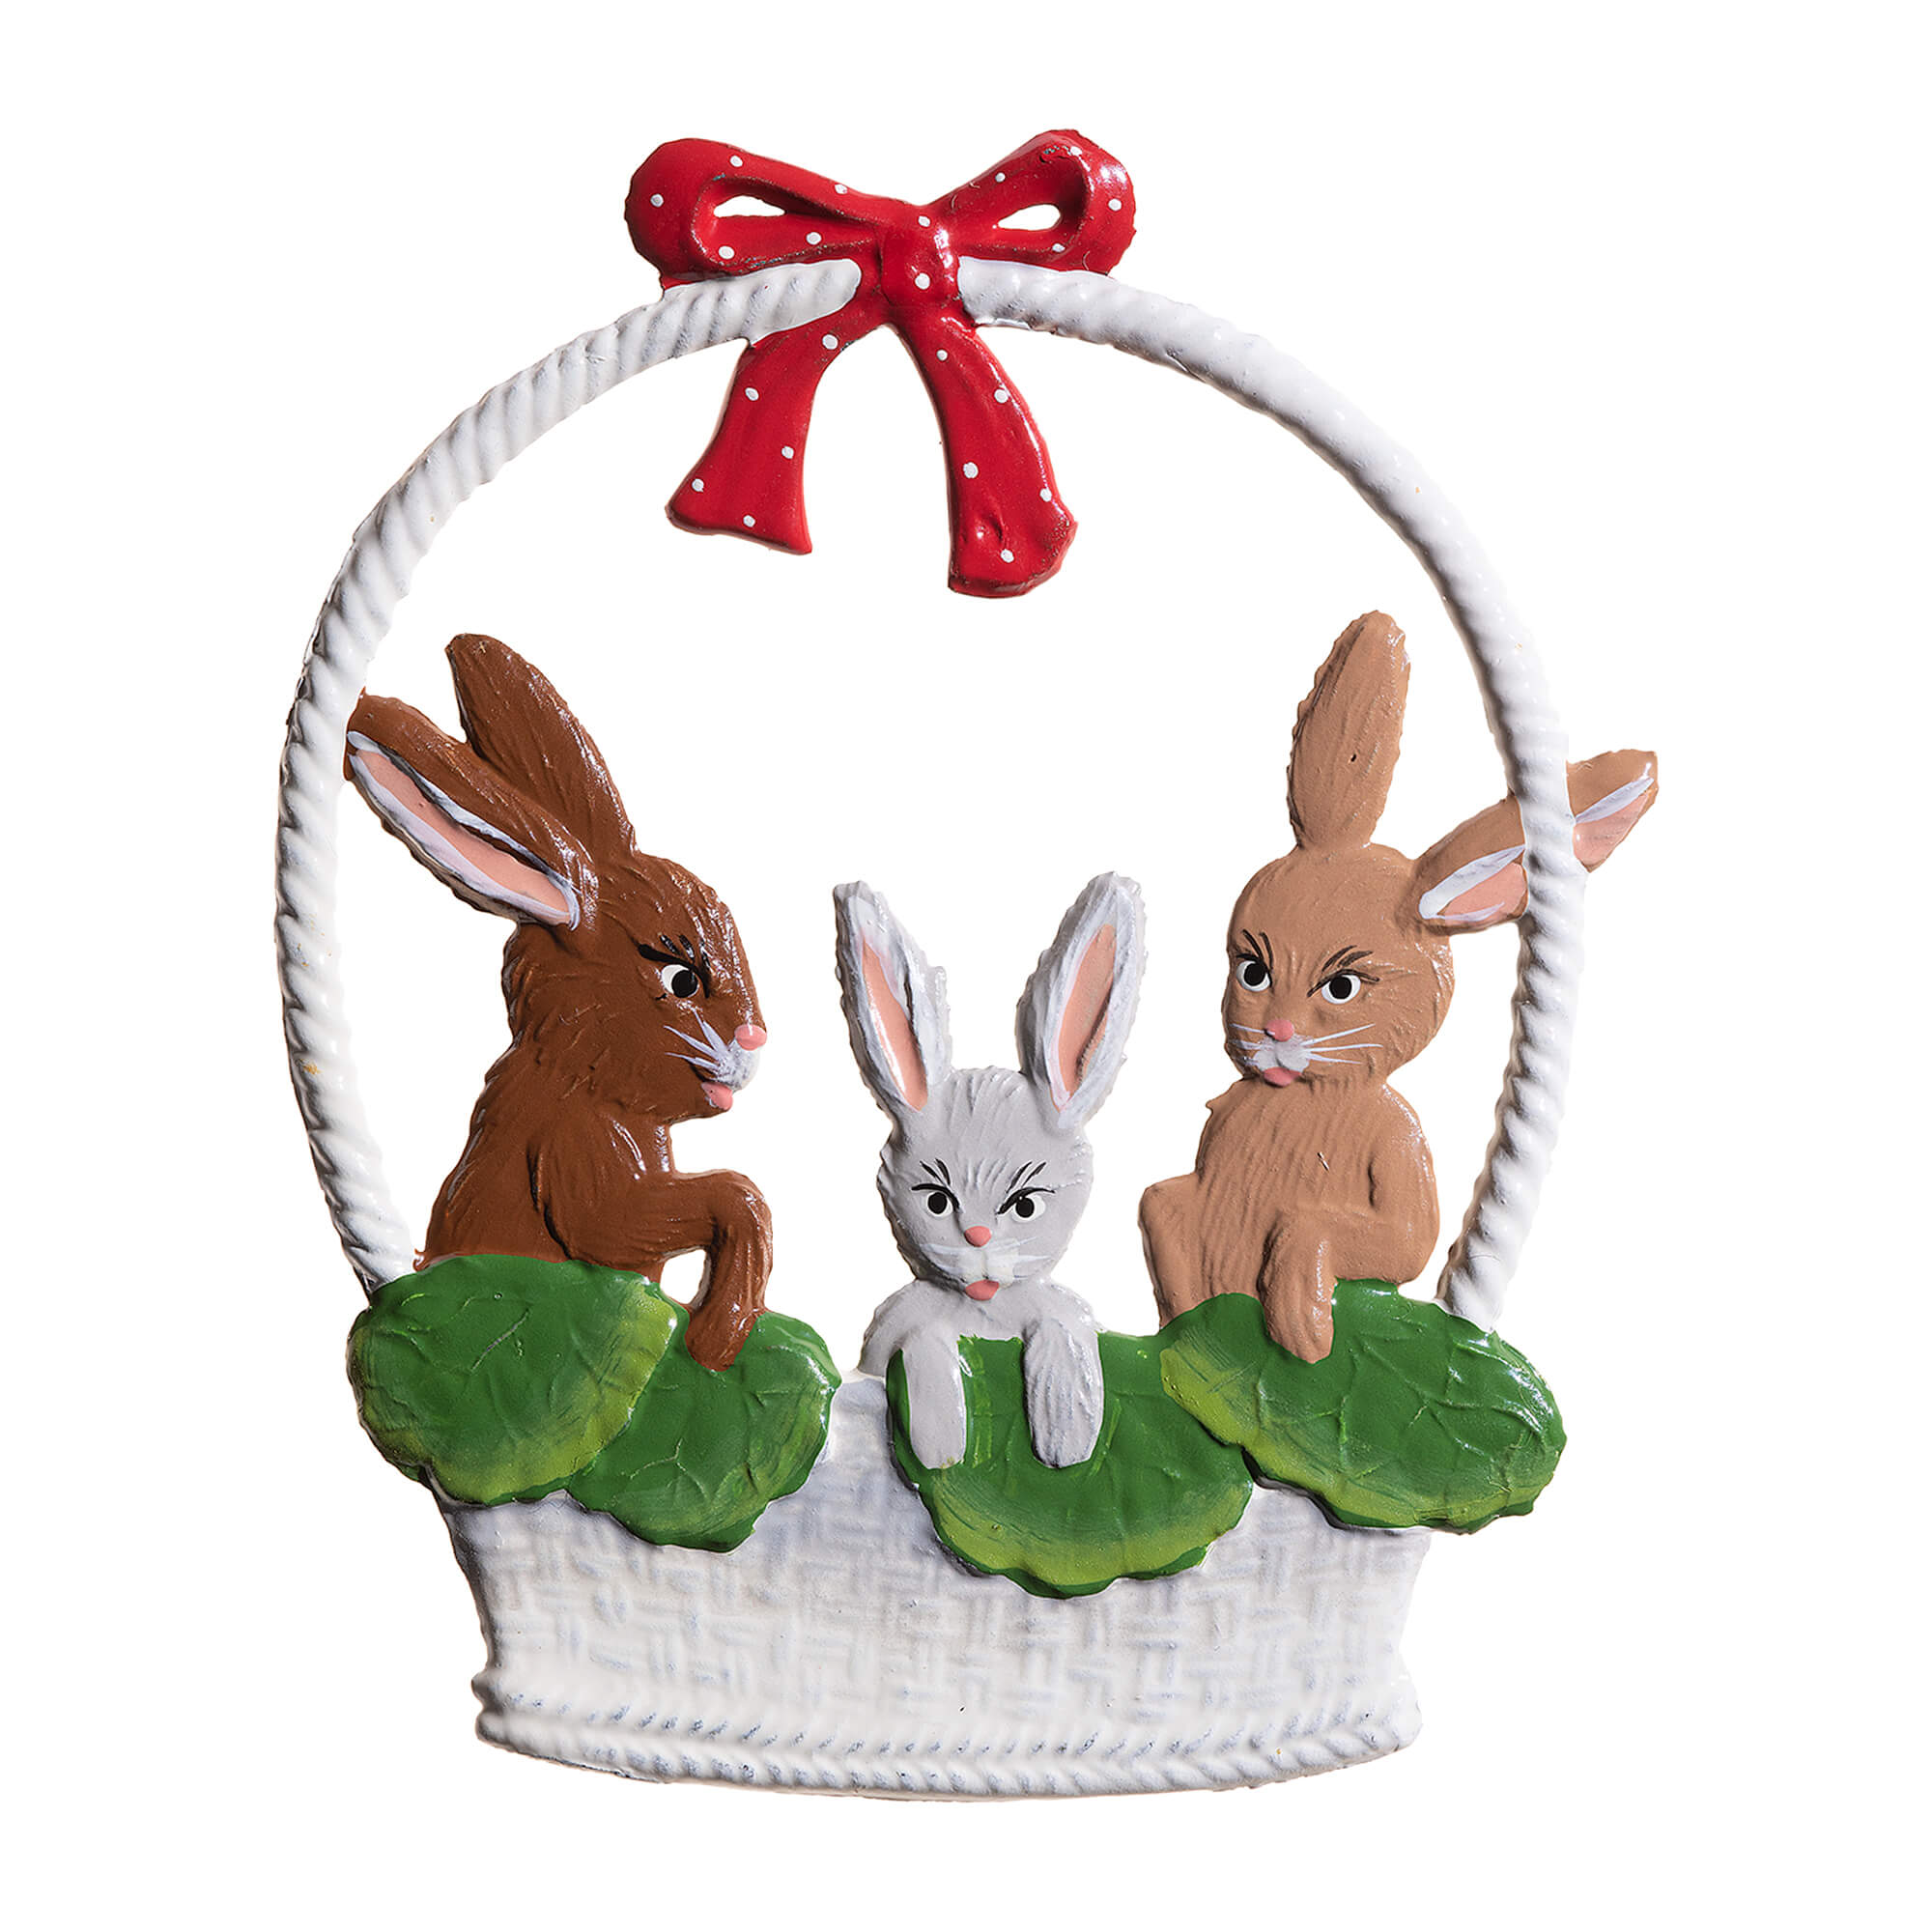 EO07 Bunnies in Basket Ornament